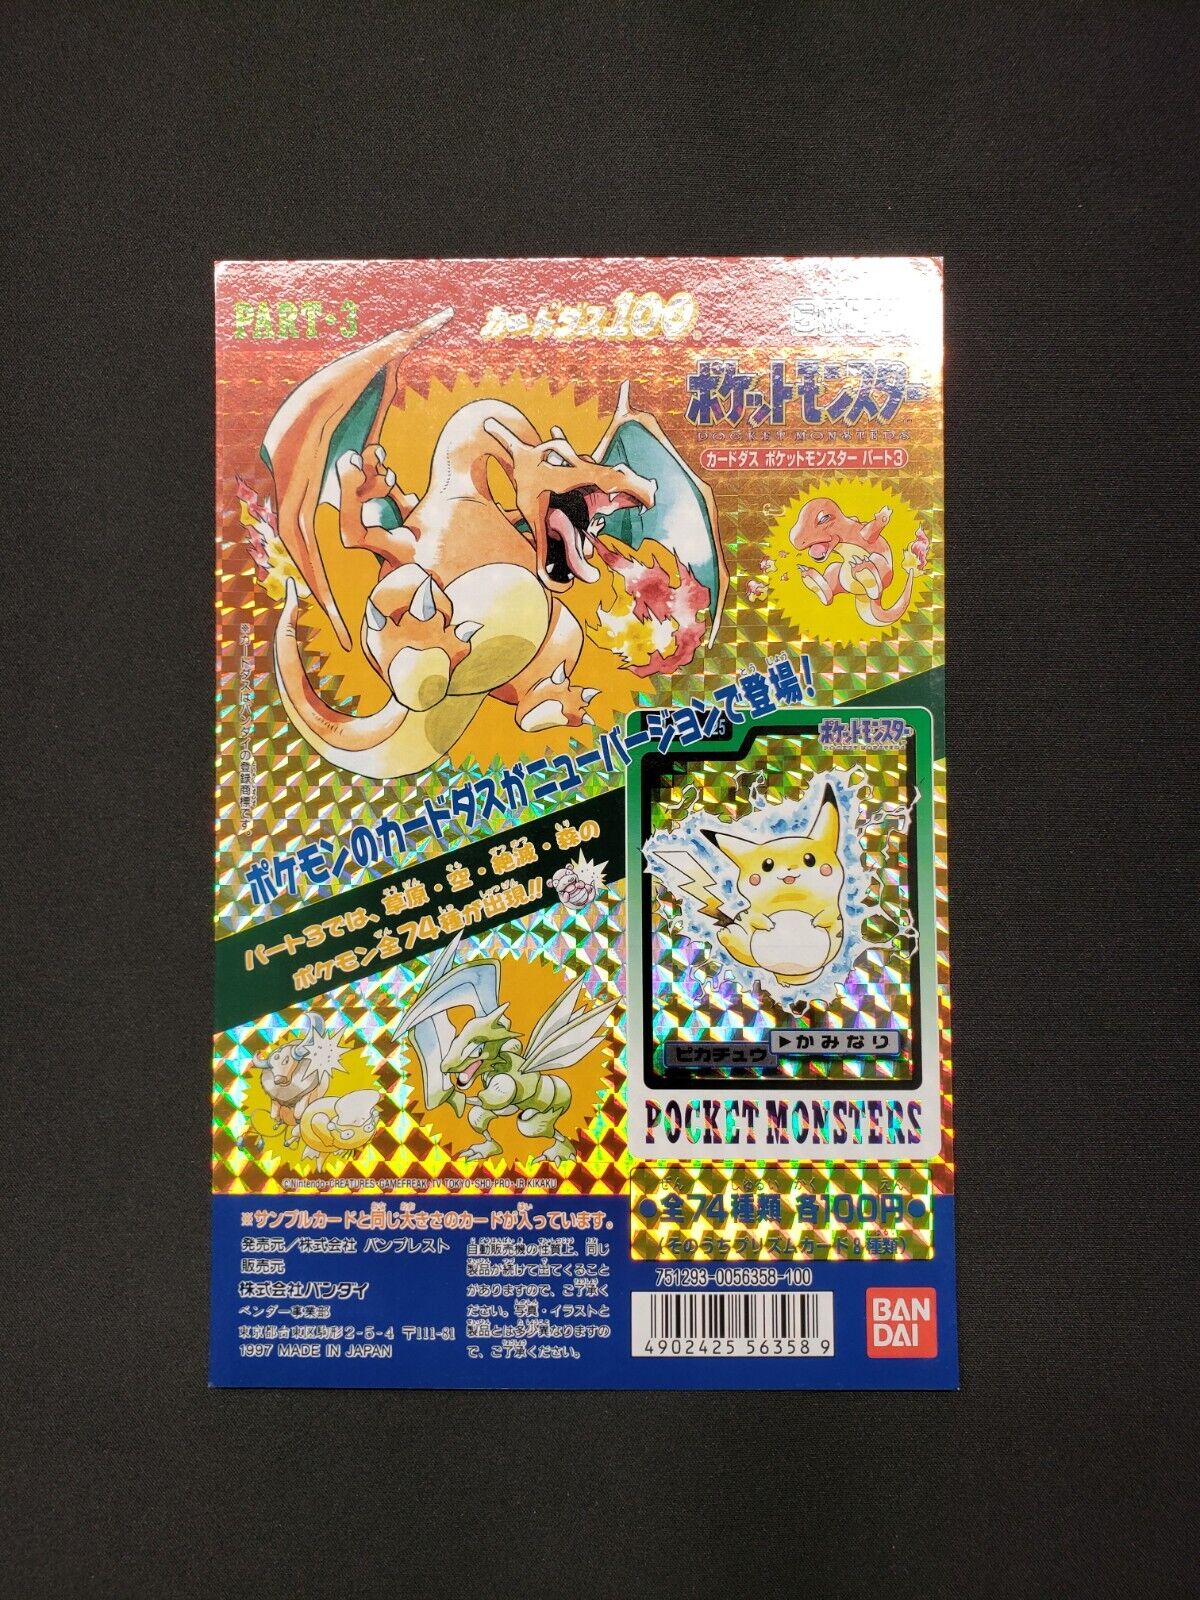 1997 Bandai Pokemon Carddass Display Mount Japanese Part 3 Pikachu, Charizard